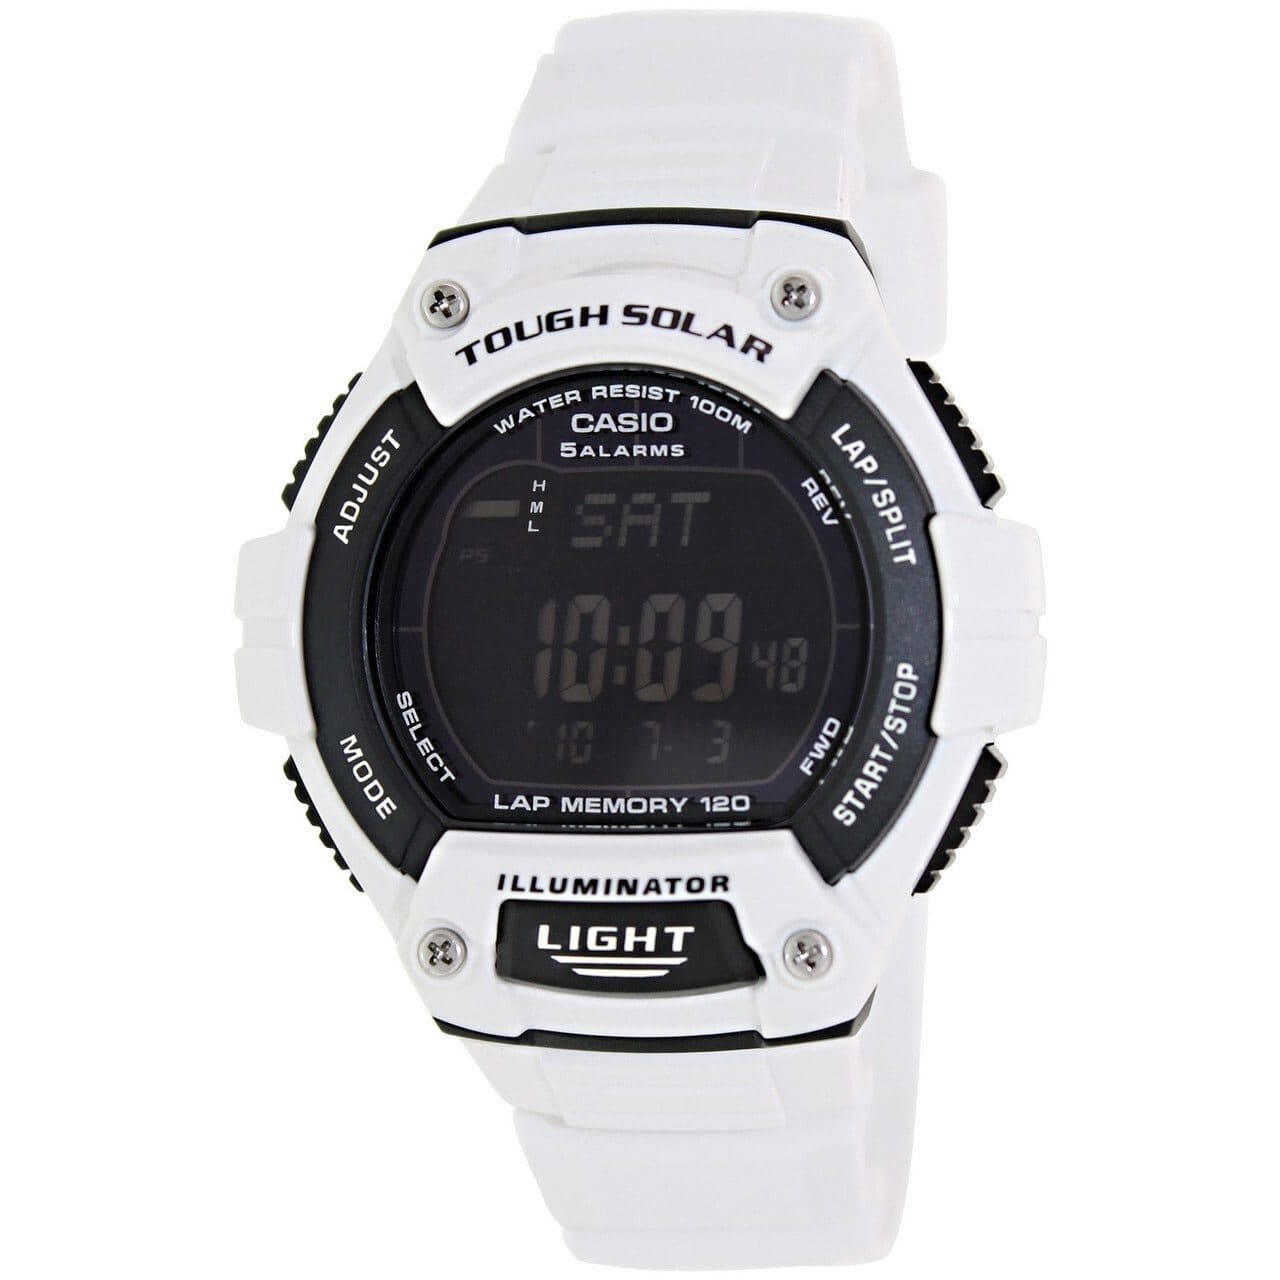 Casio Runners Tough Solar WS220C-7BV White Resin Digital 120 Lap 100M Watch